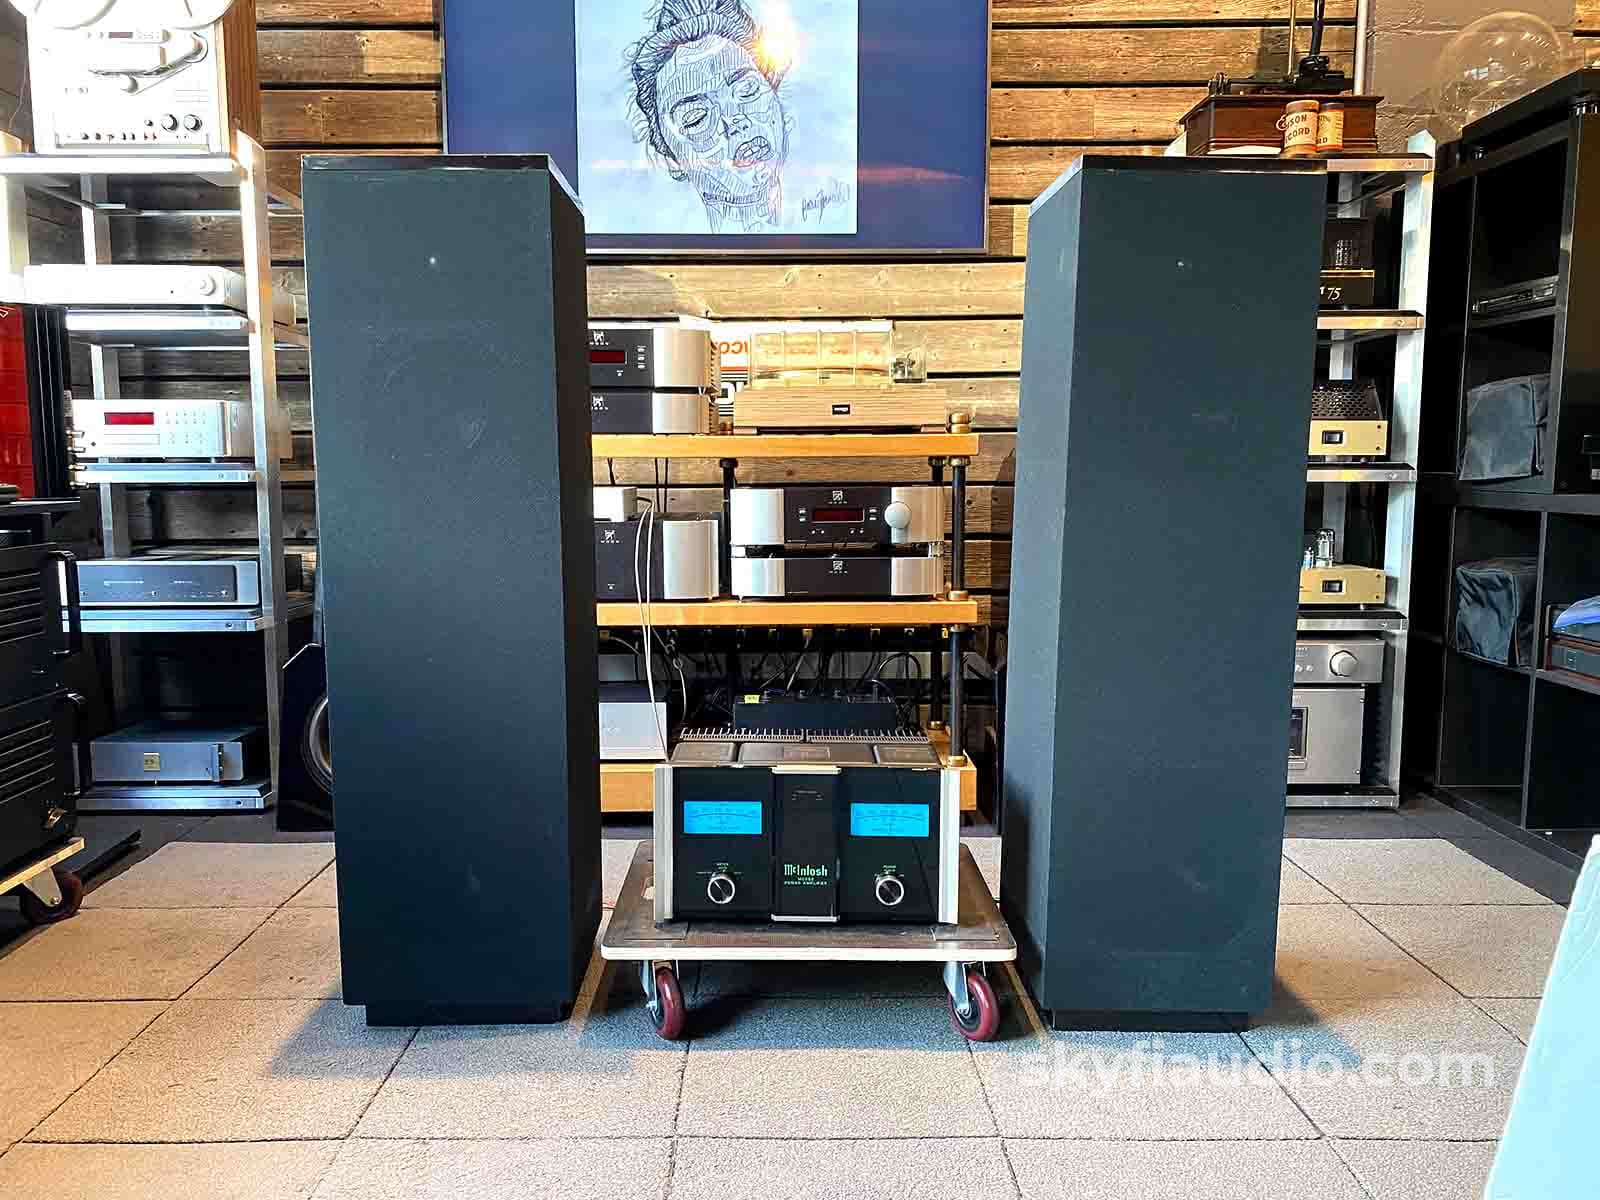 Symdex Audio Epsilon Speakers - Restored